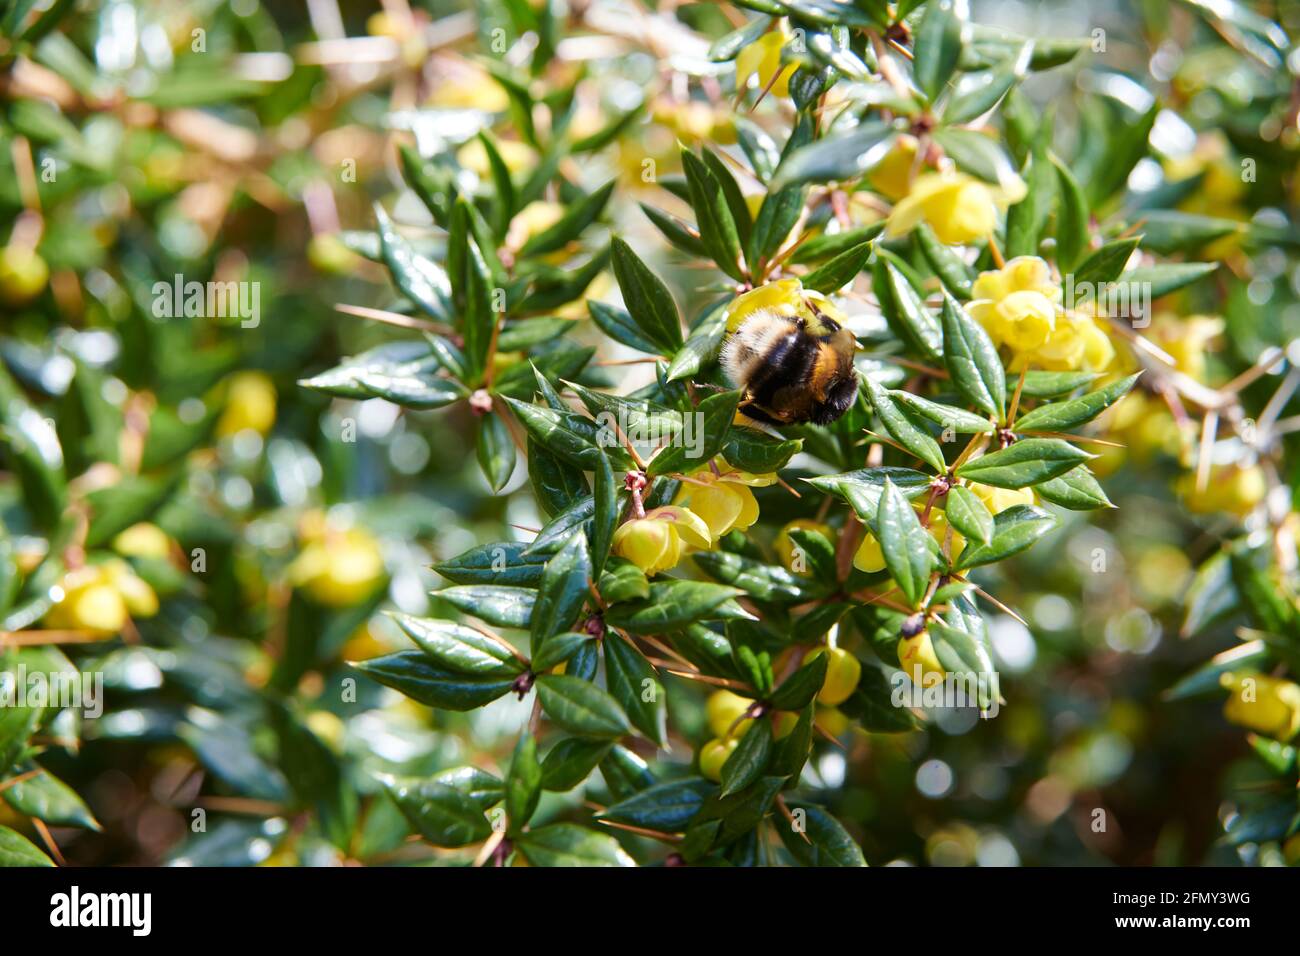 Bombus terrestris, the buff-tailed bumblebee pollinating on a Wintergreen Barbery (Berberis juliana) Stock Photo